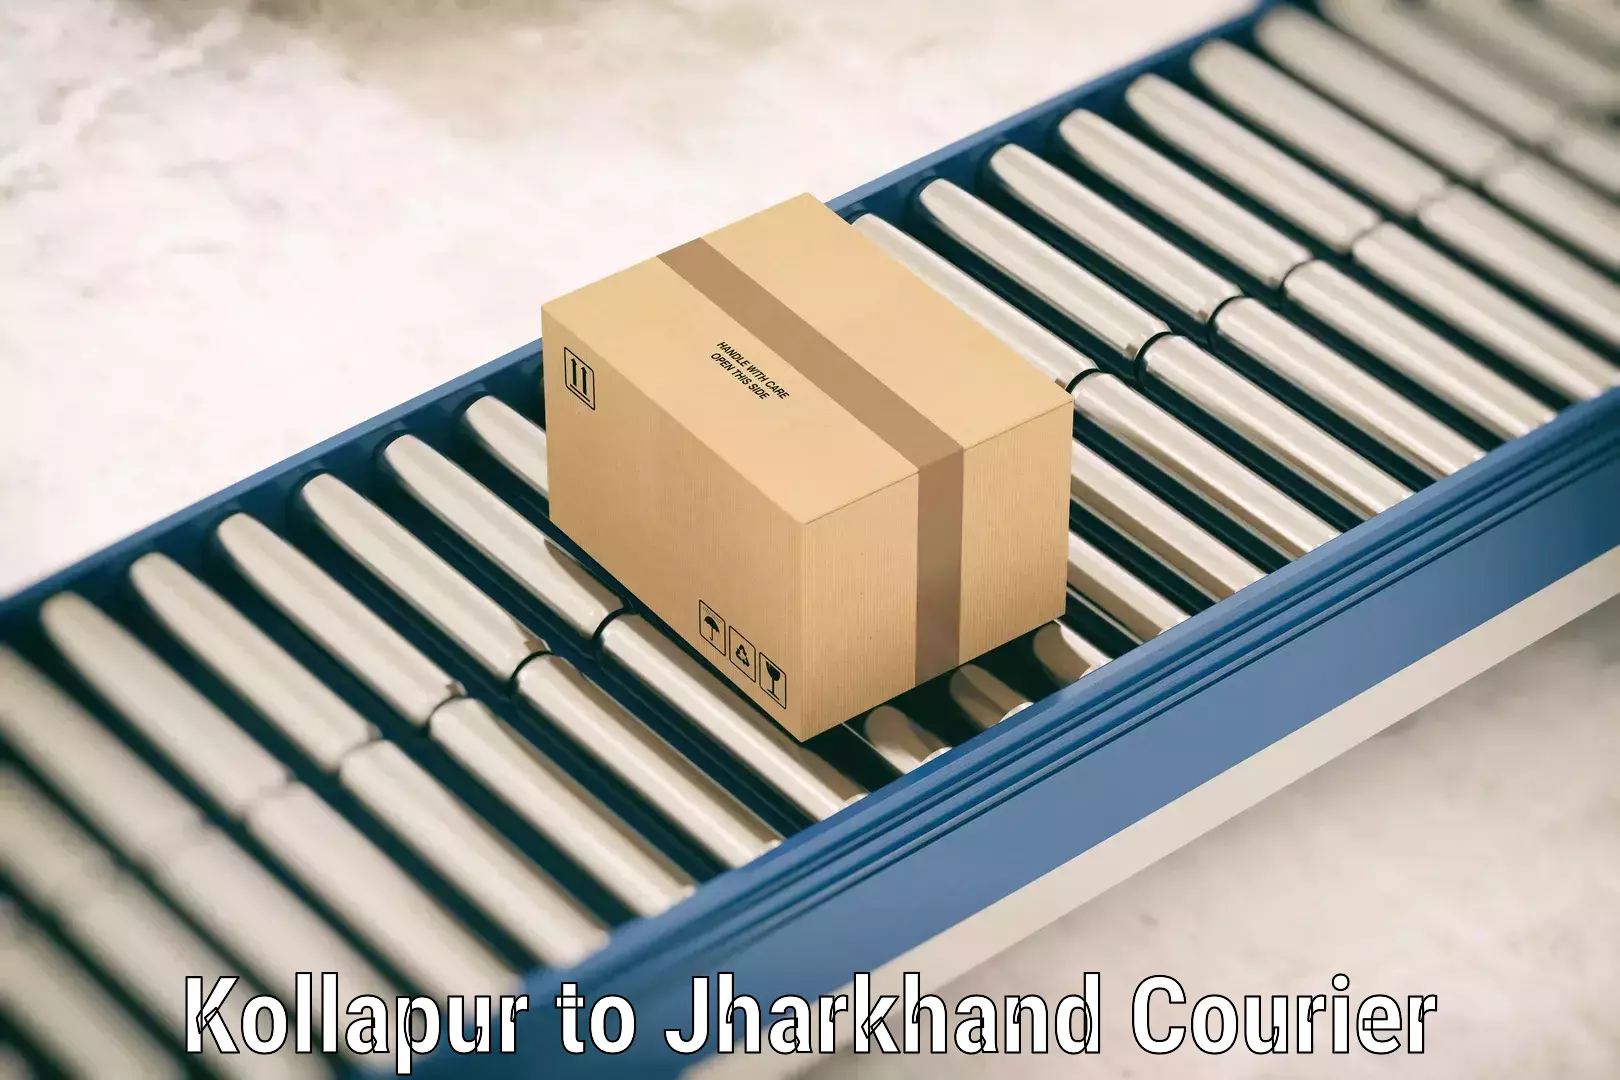 Baggage delivery optimization Kollapur to Jamshedpur